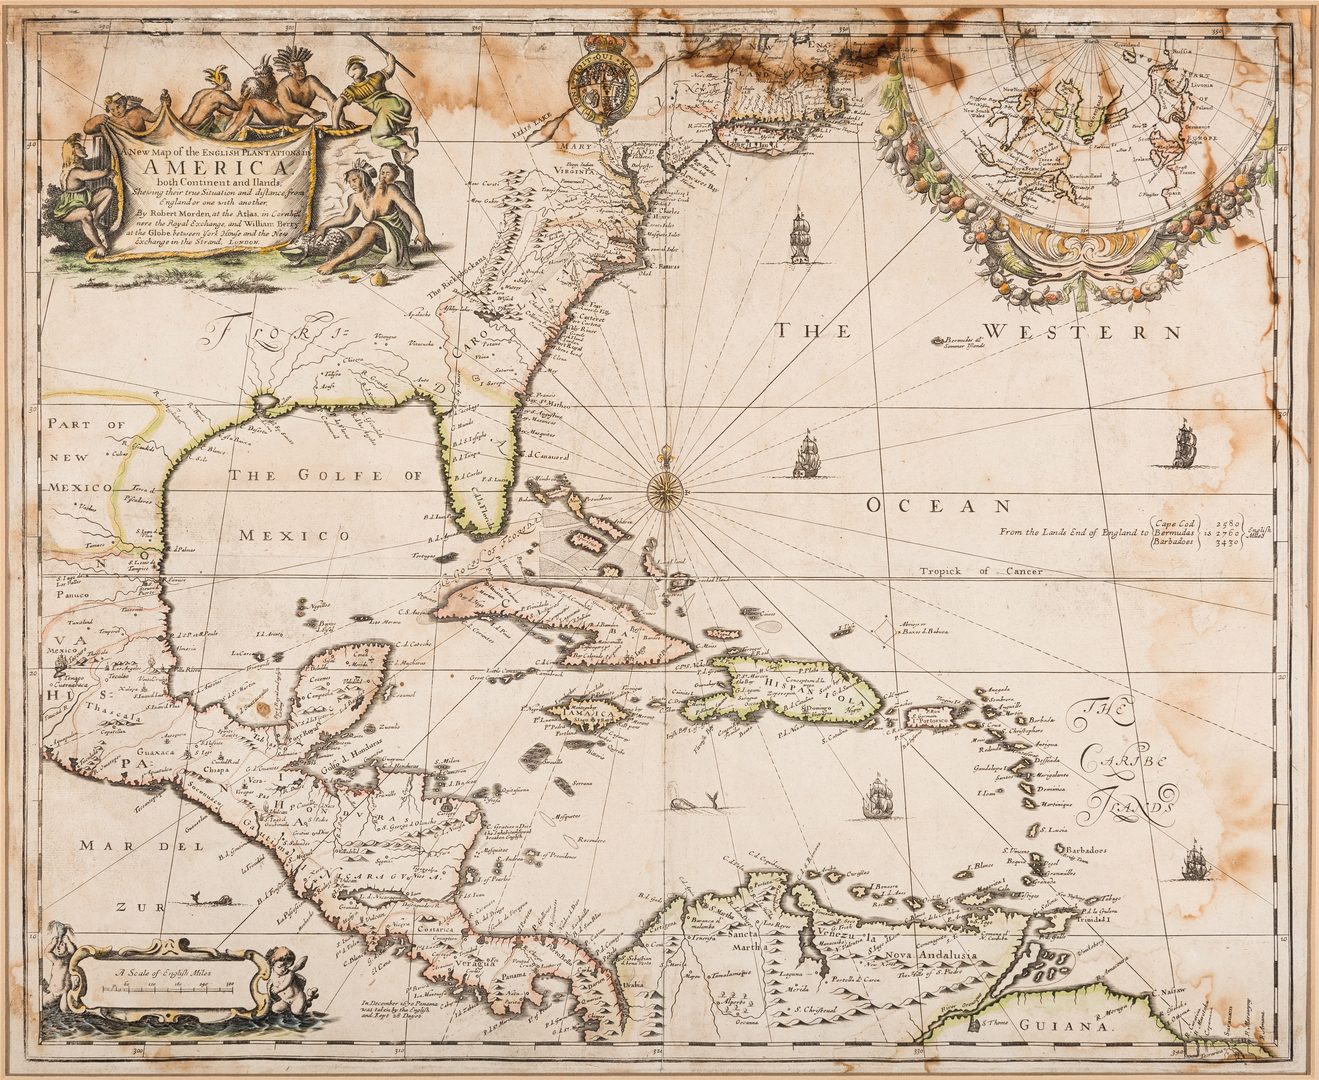 Lot 276: Morden 1673 Virginia Map of English Plantations